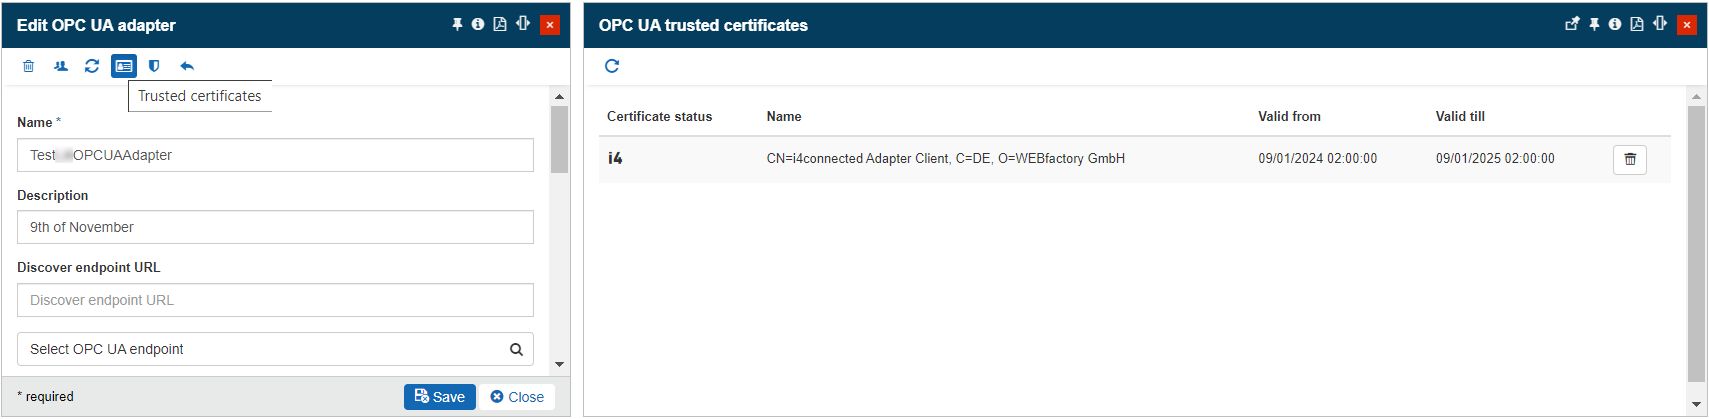 trusted_certificates.jpg